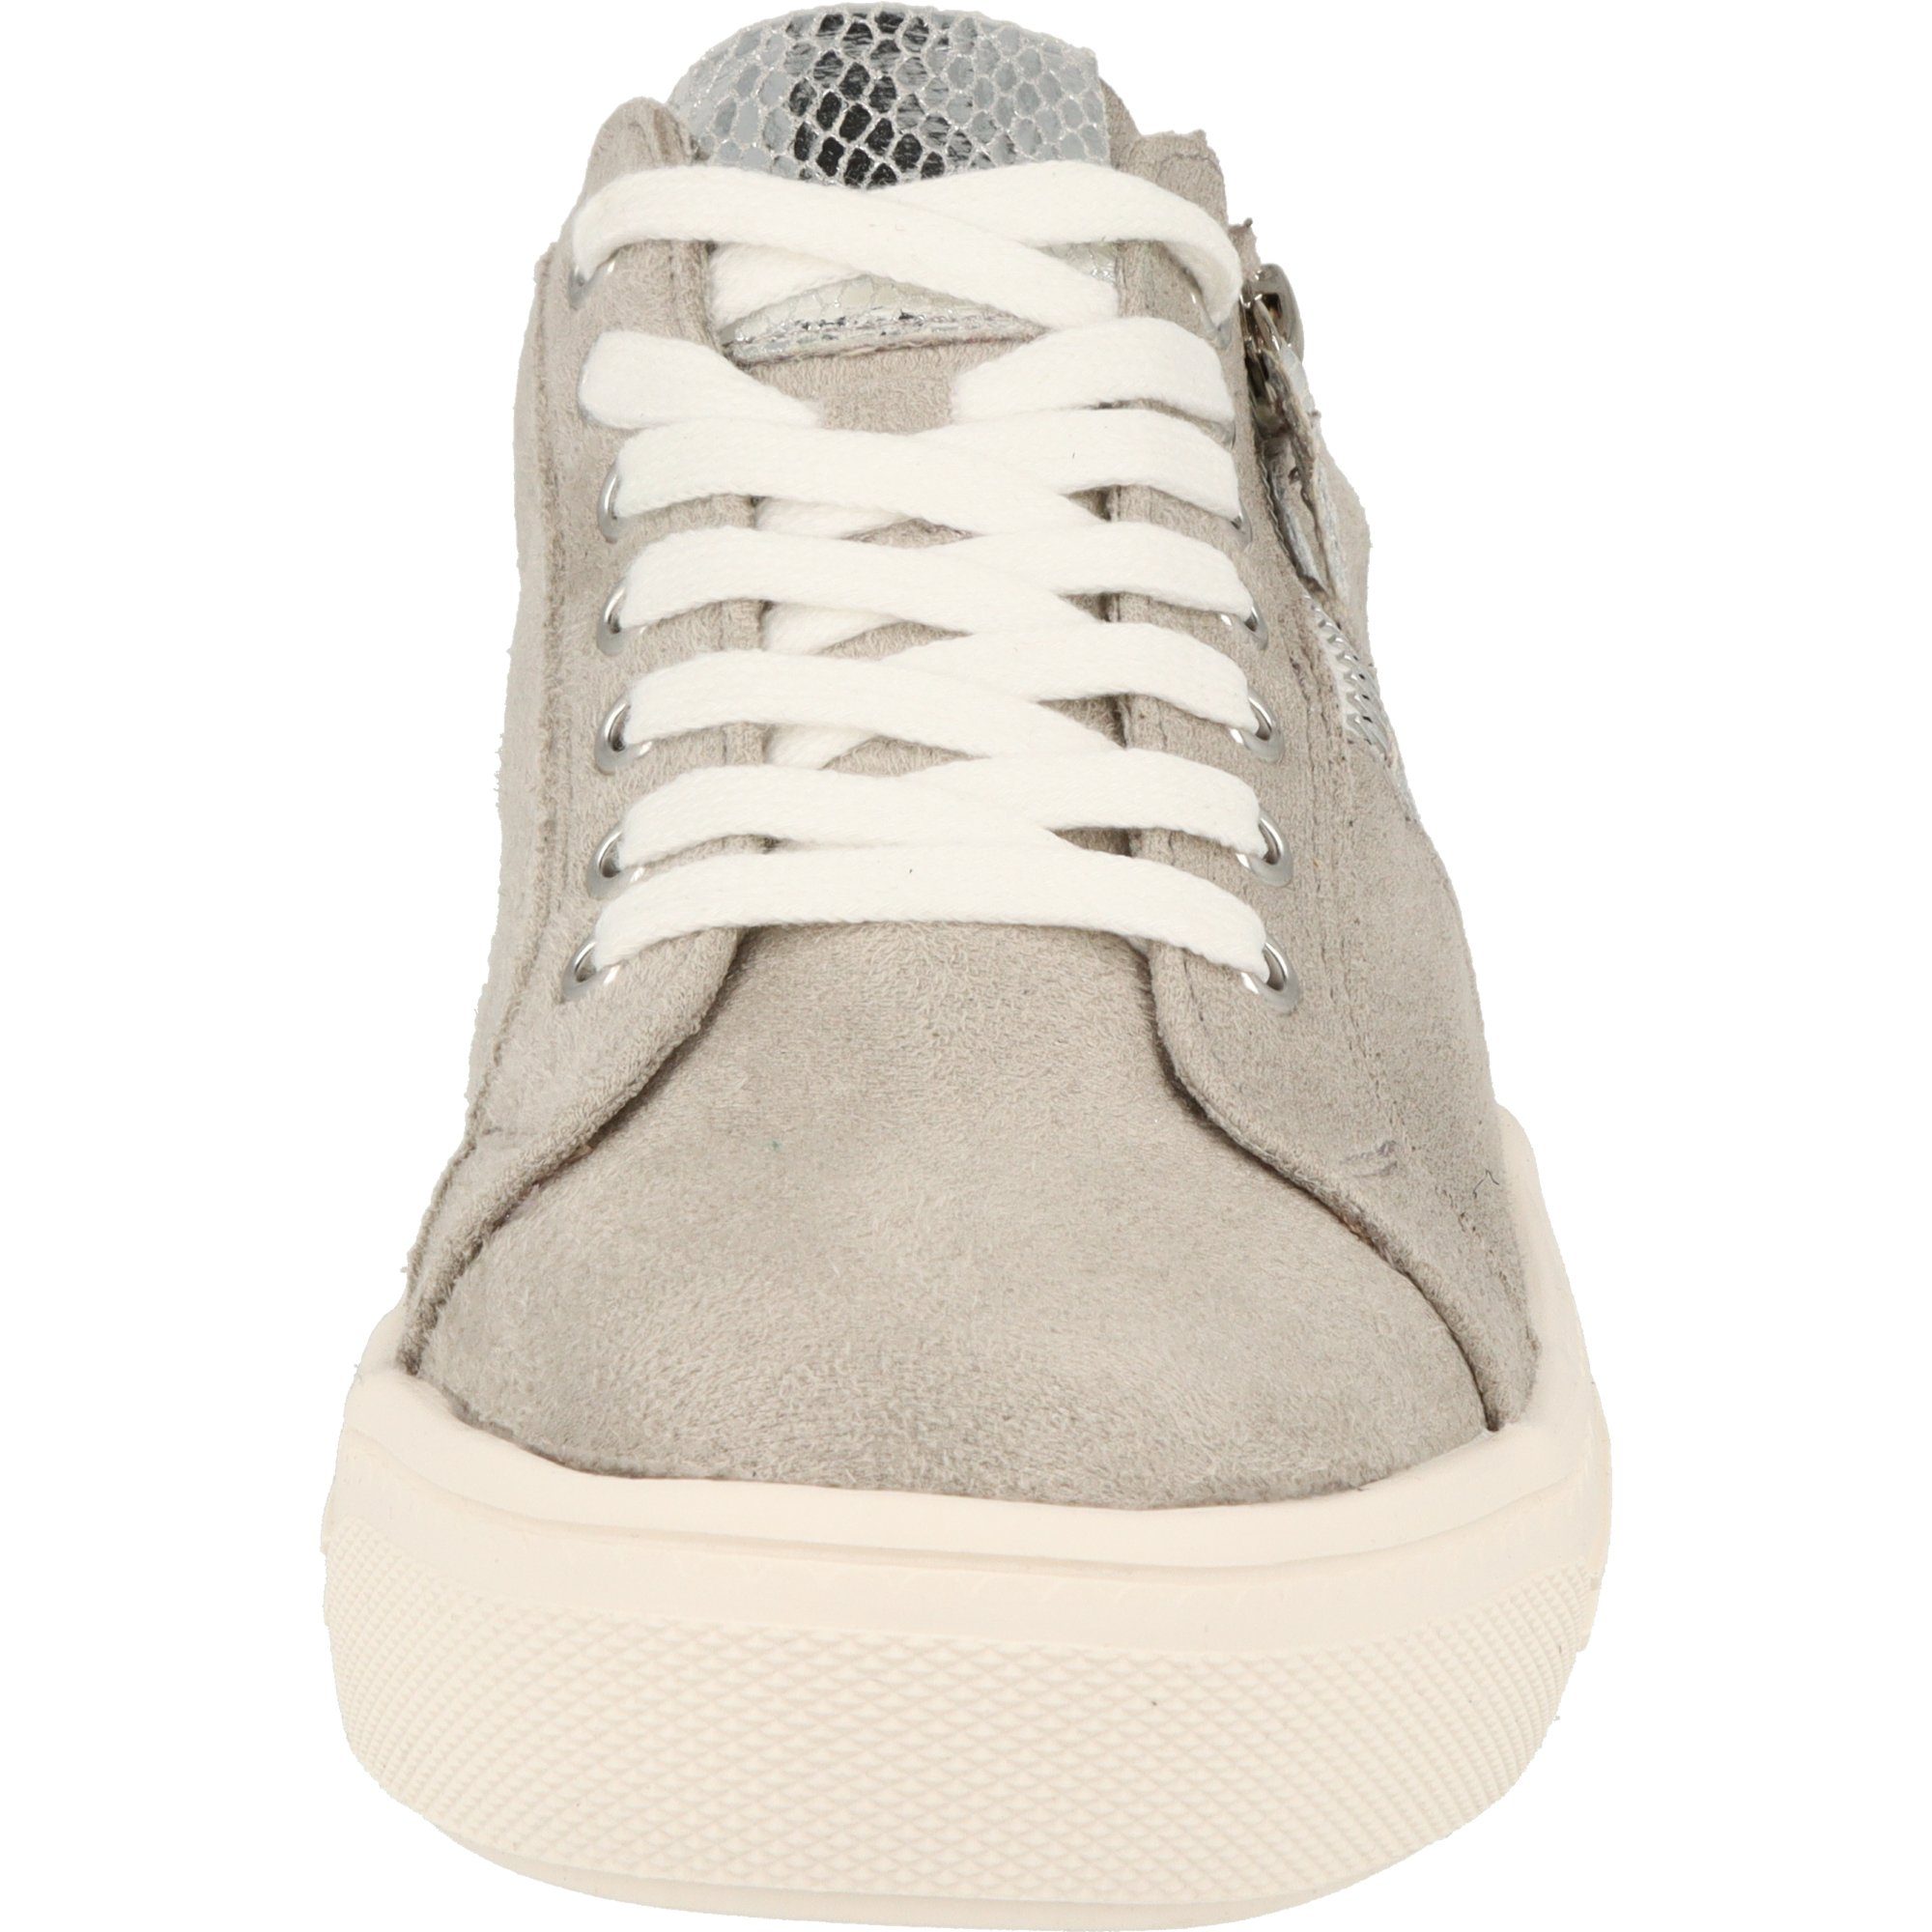 Grey Schuhe Jane Damen Sneaker Light Schnürschuh Halbschuhe 236-002 Klain